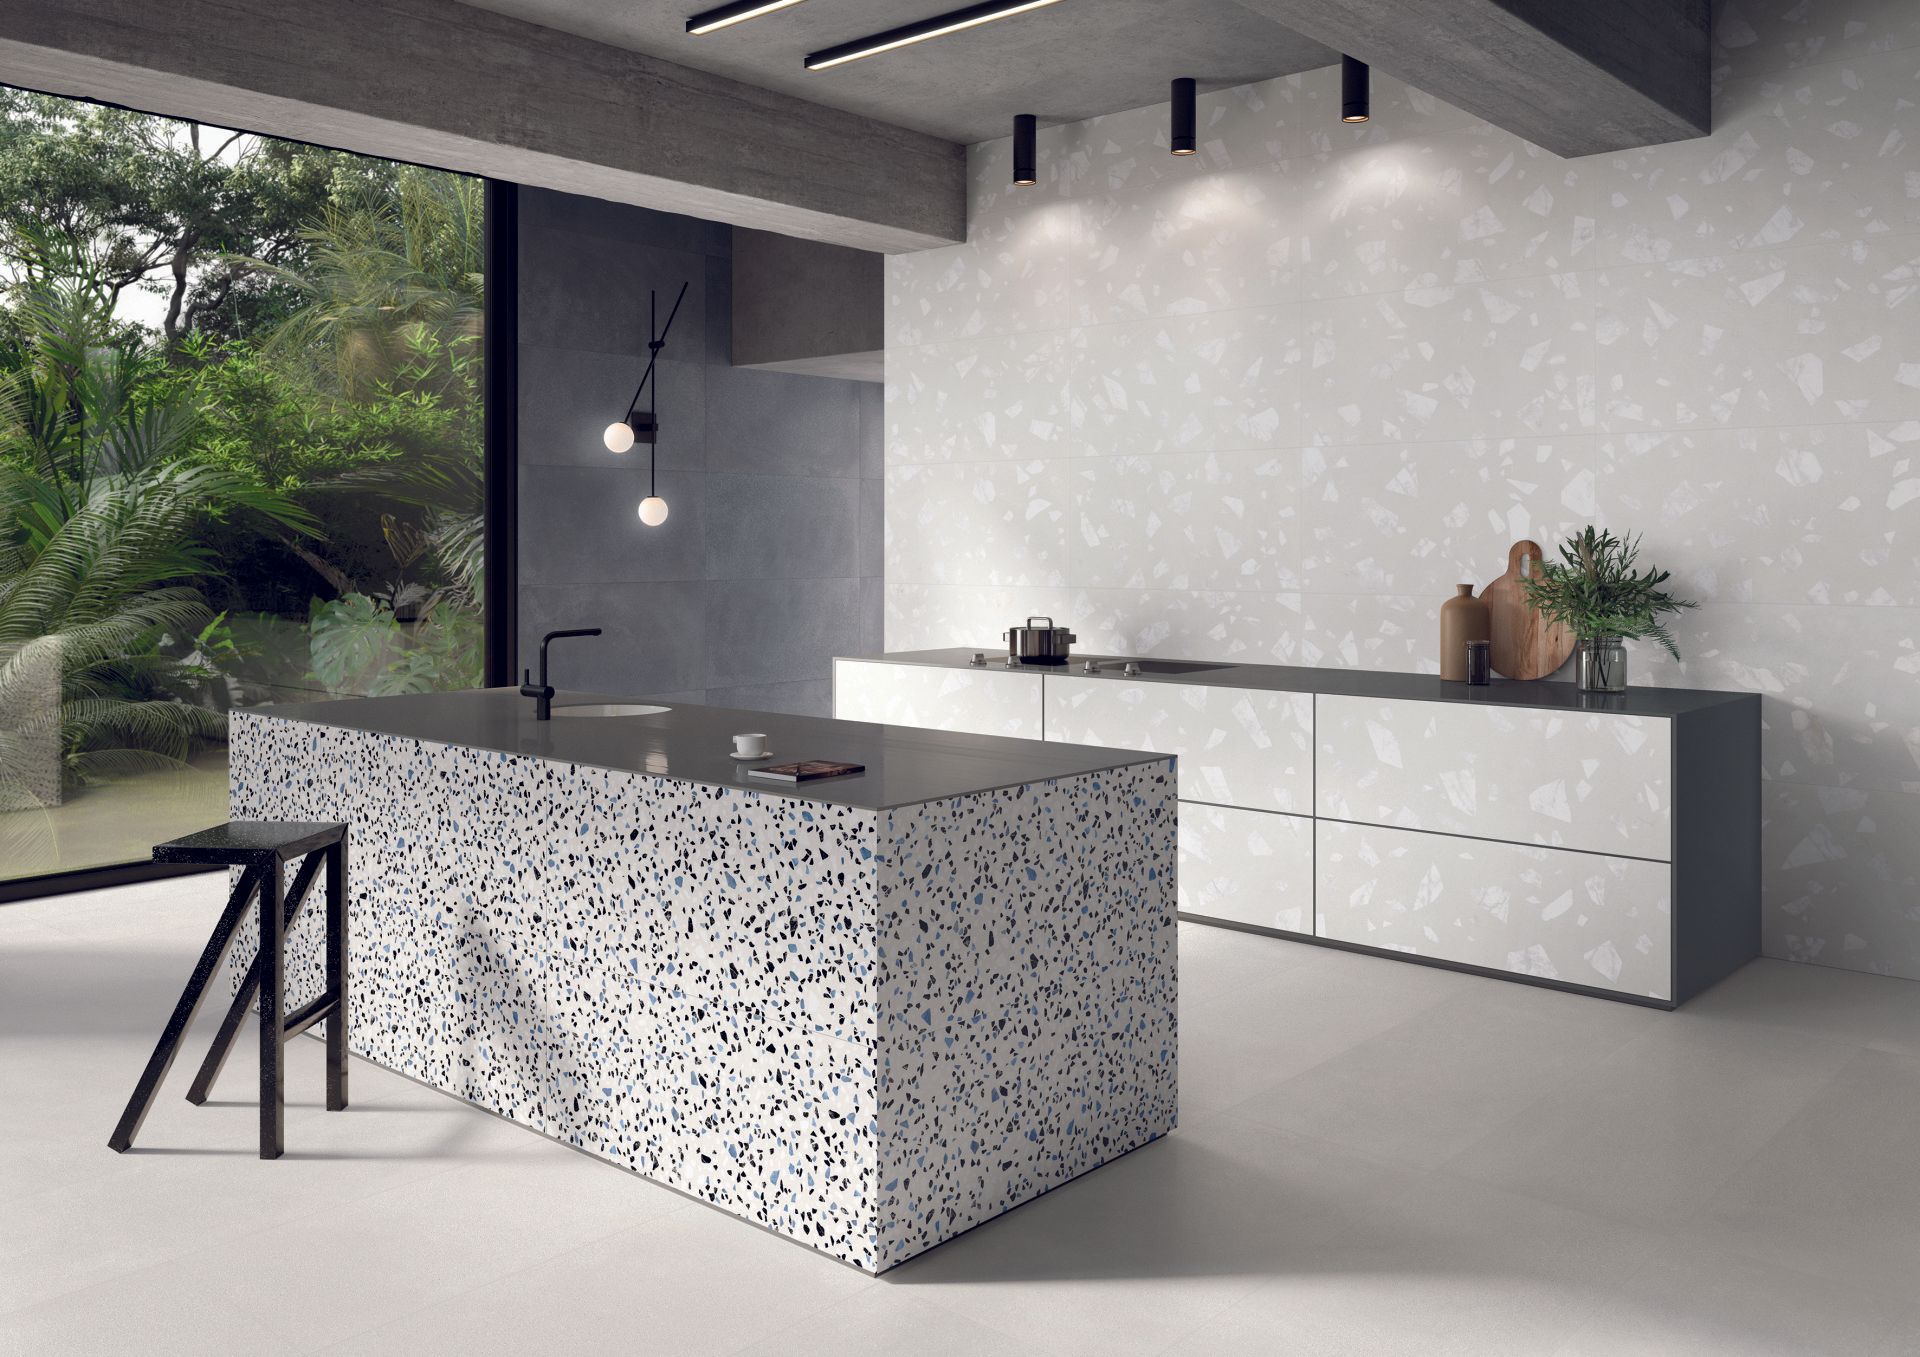 terrazzo tiles in a kitchen design , modern architecture, modern design